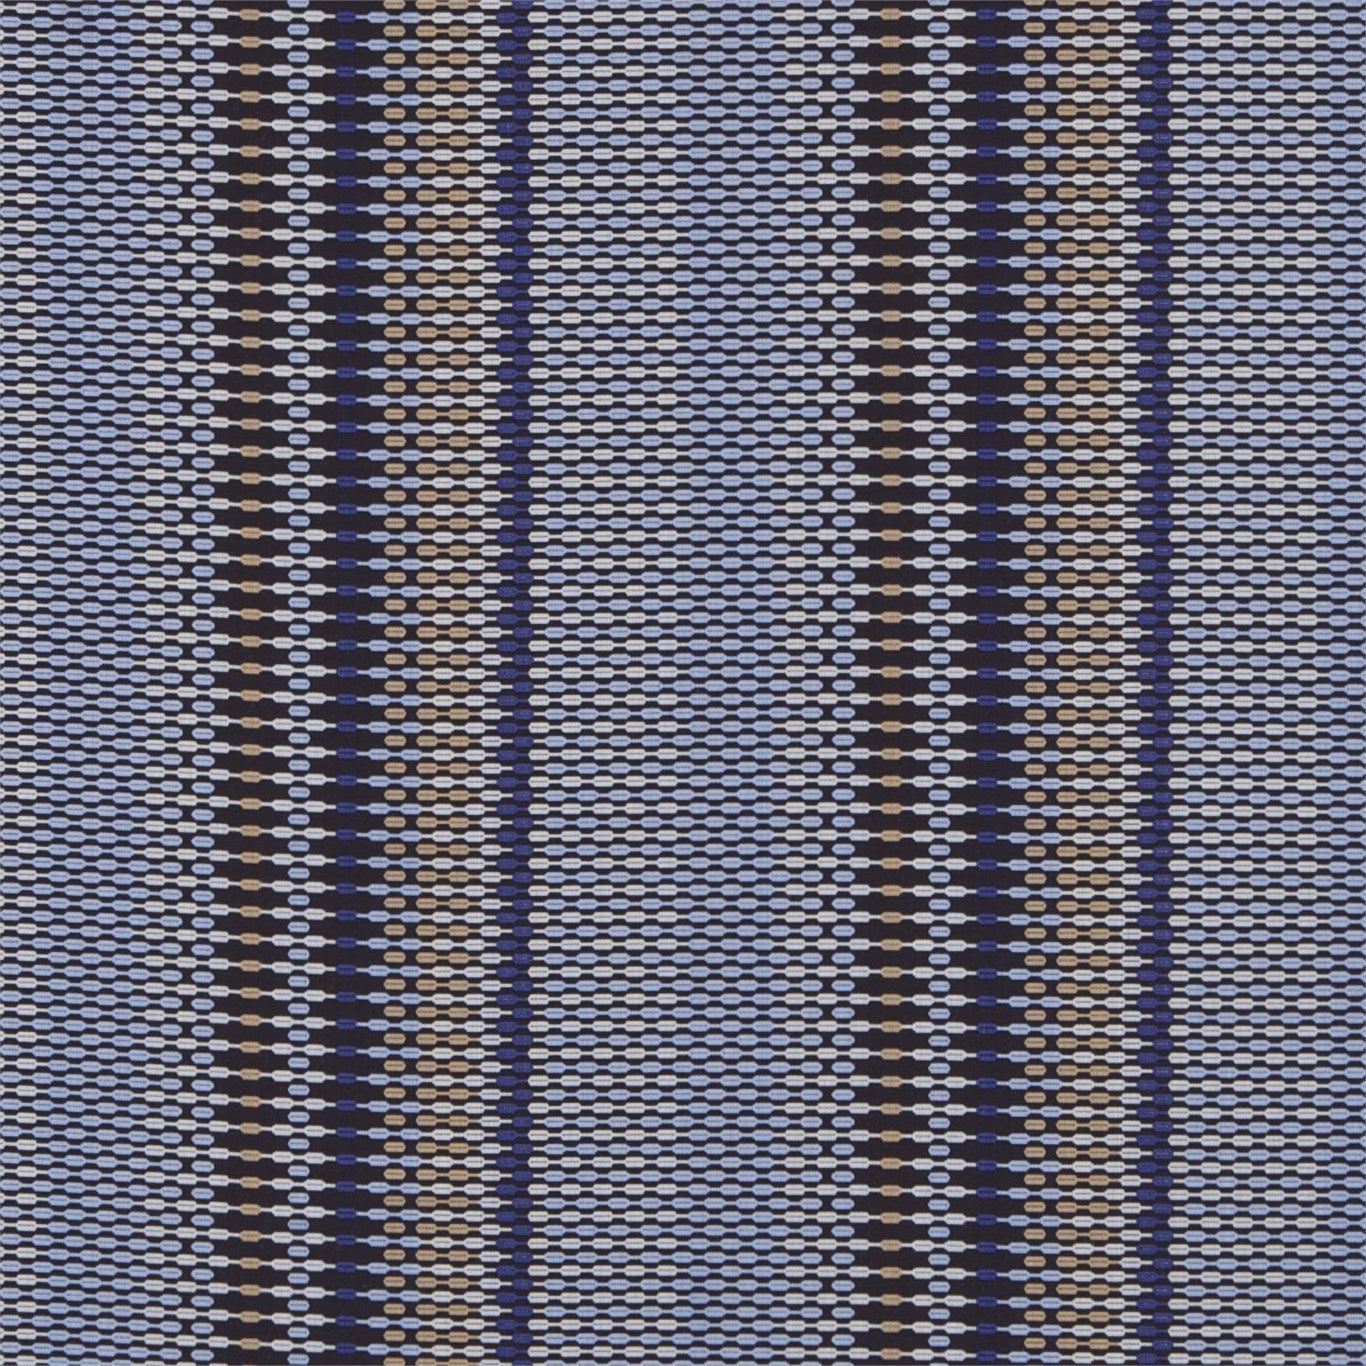 Array Fabric by Harlequin - HMOD130739 - Old Navy Denim Bluebell Slate